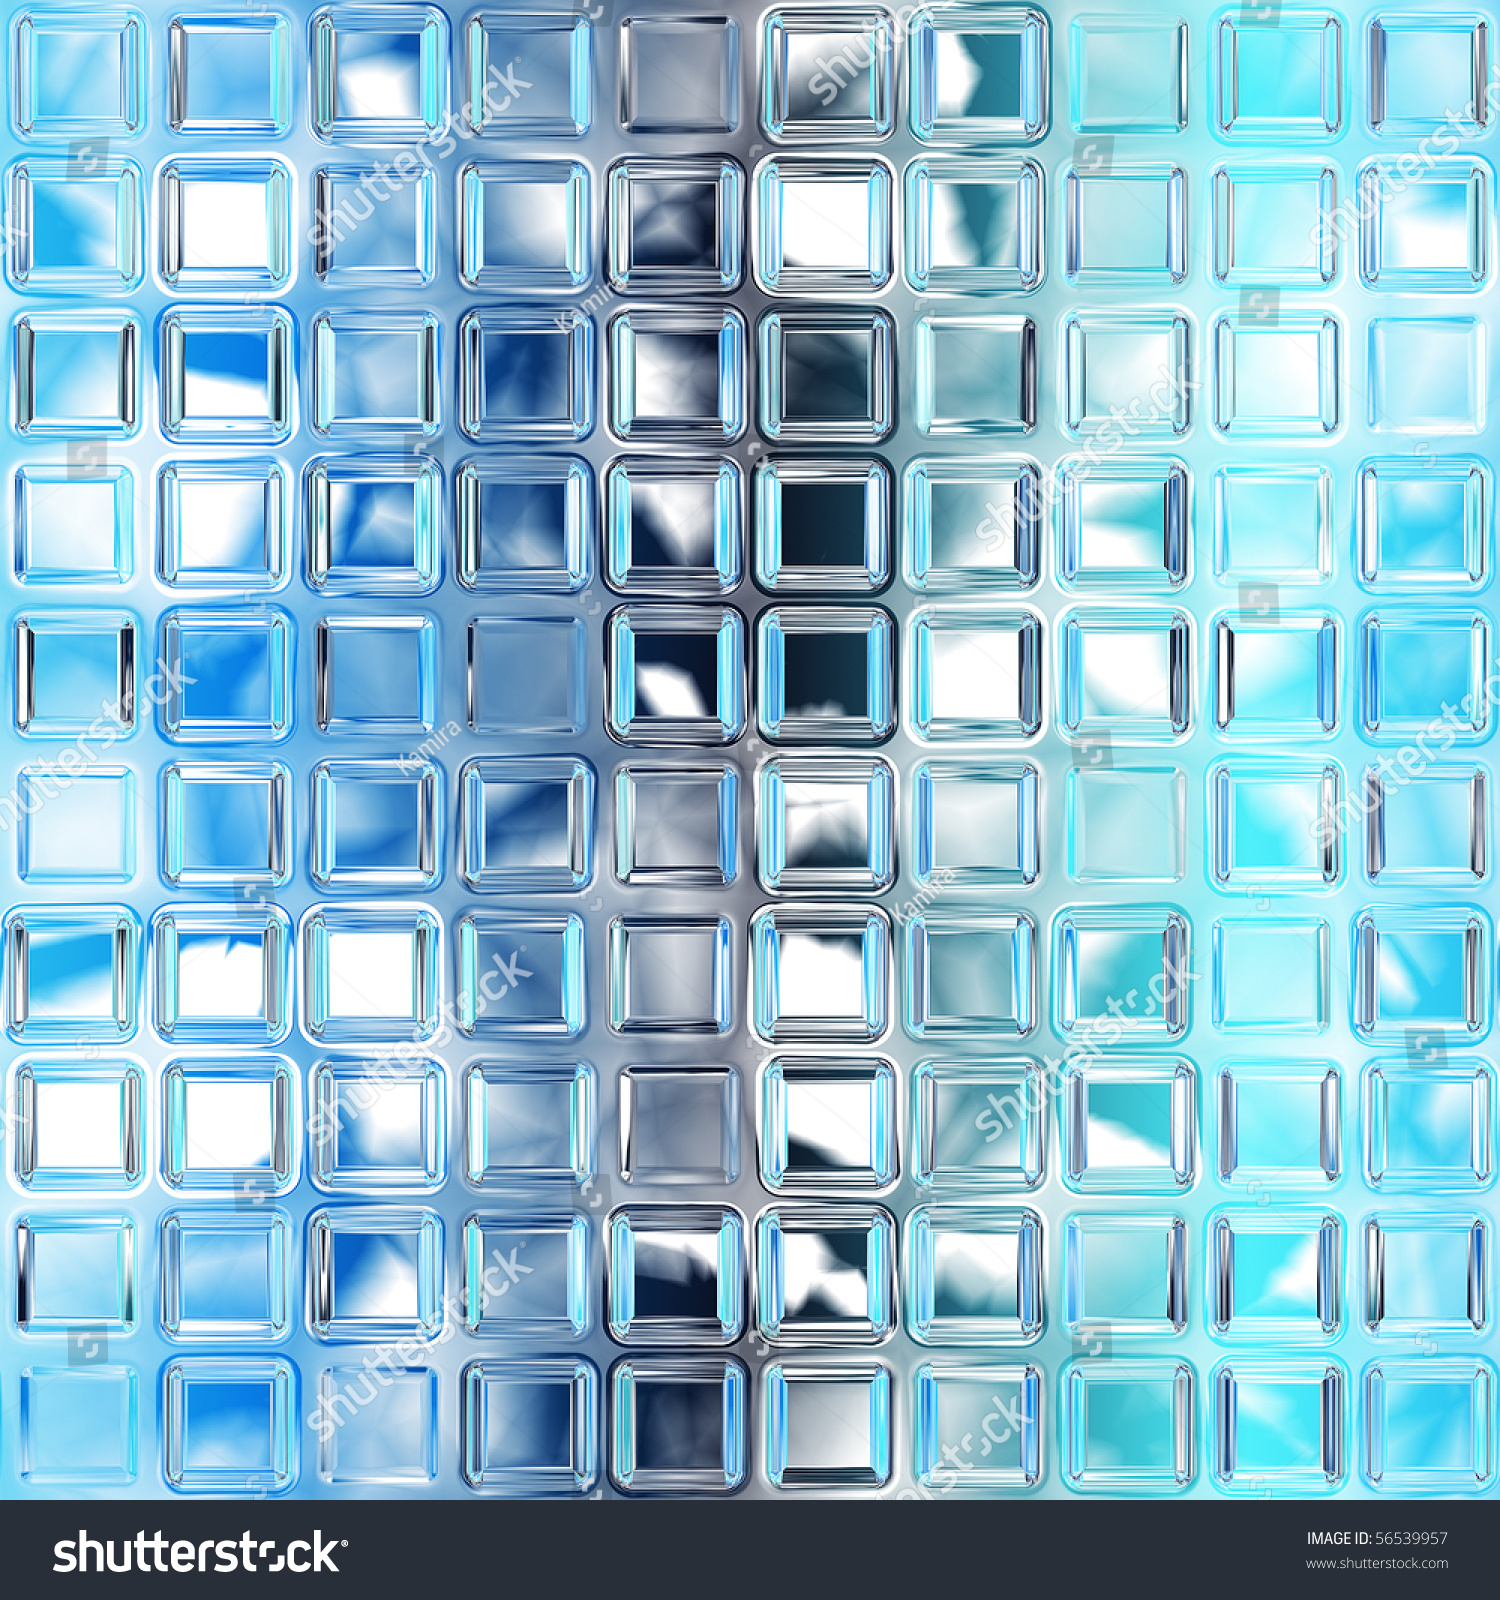 Seamless Blue Glass Tiles Texture Background Stock ...